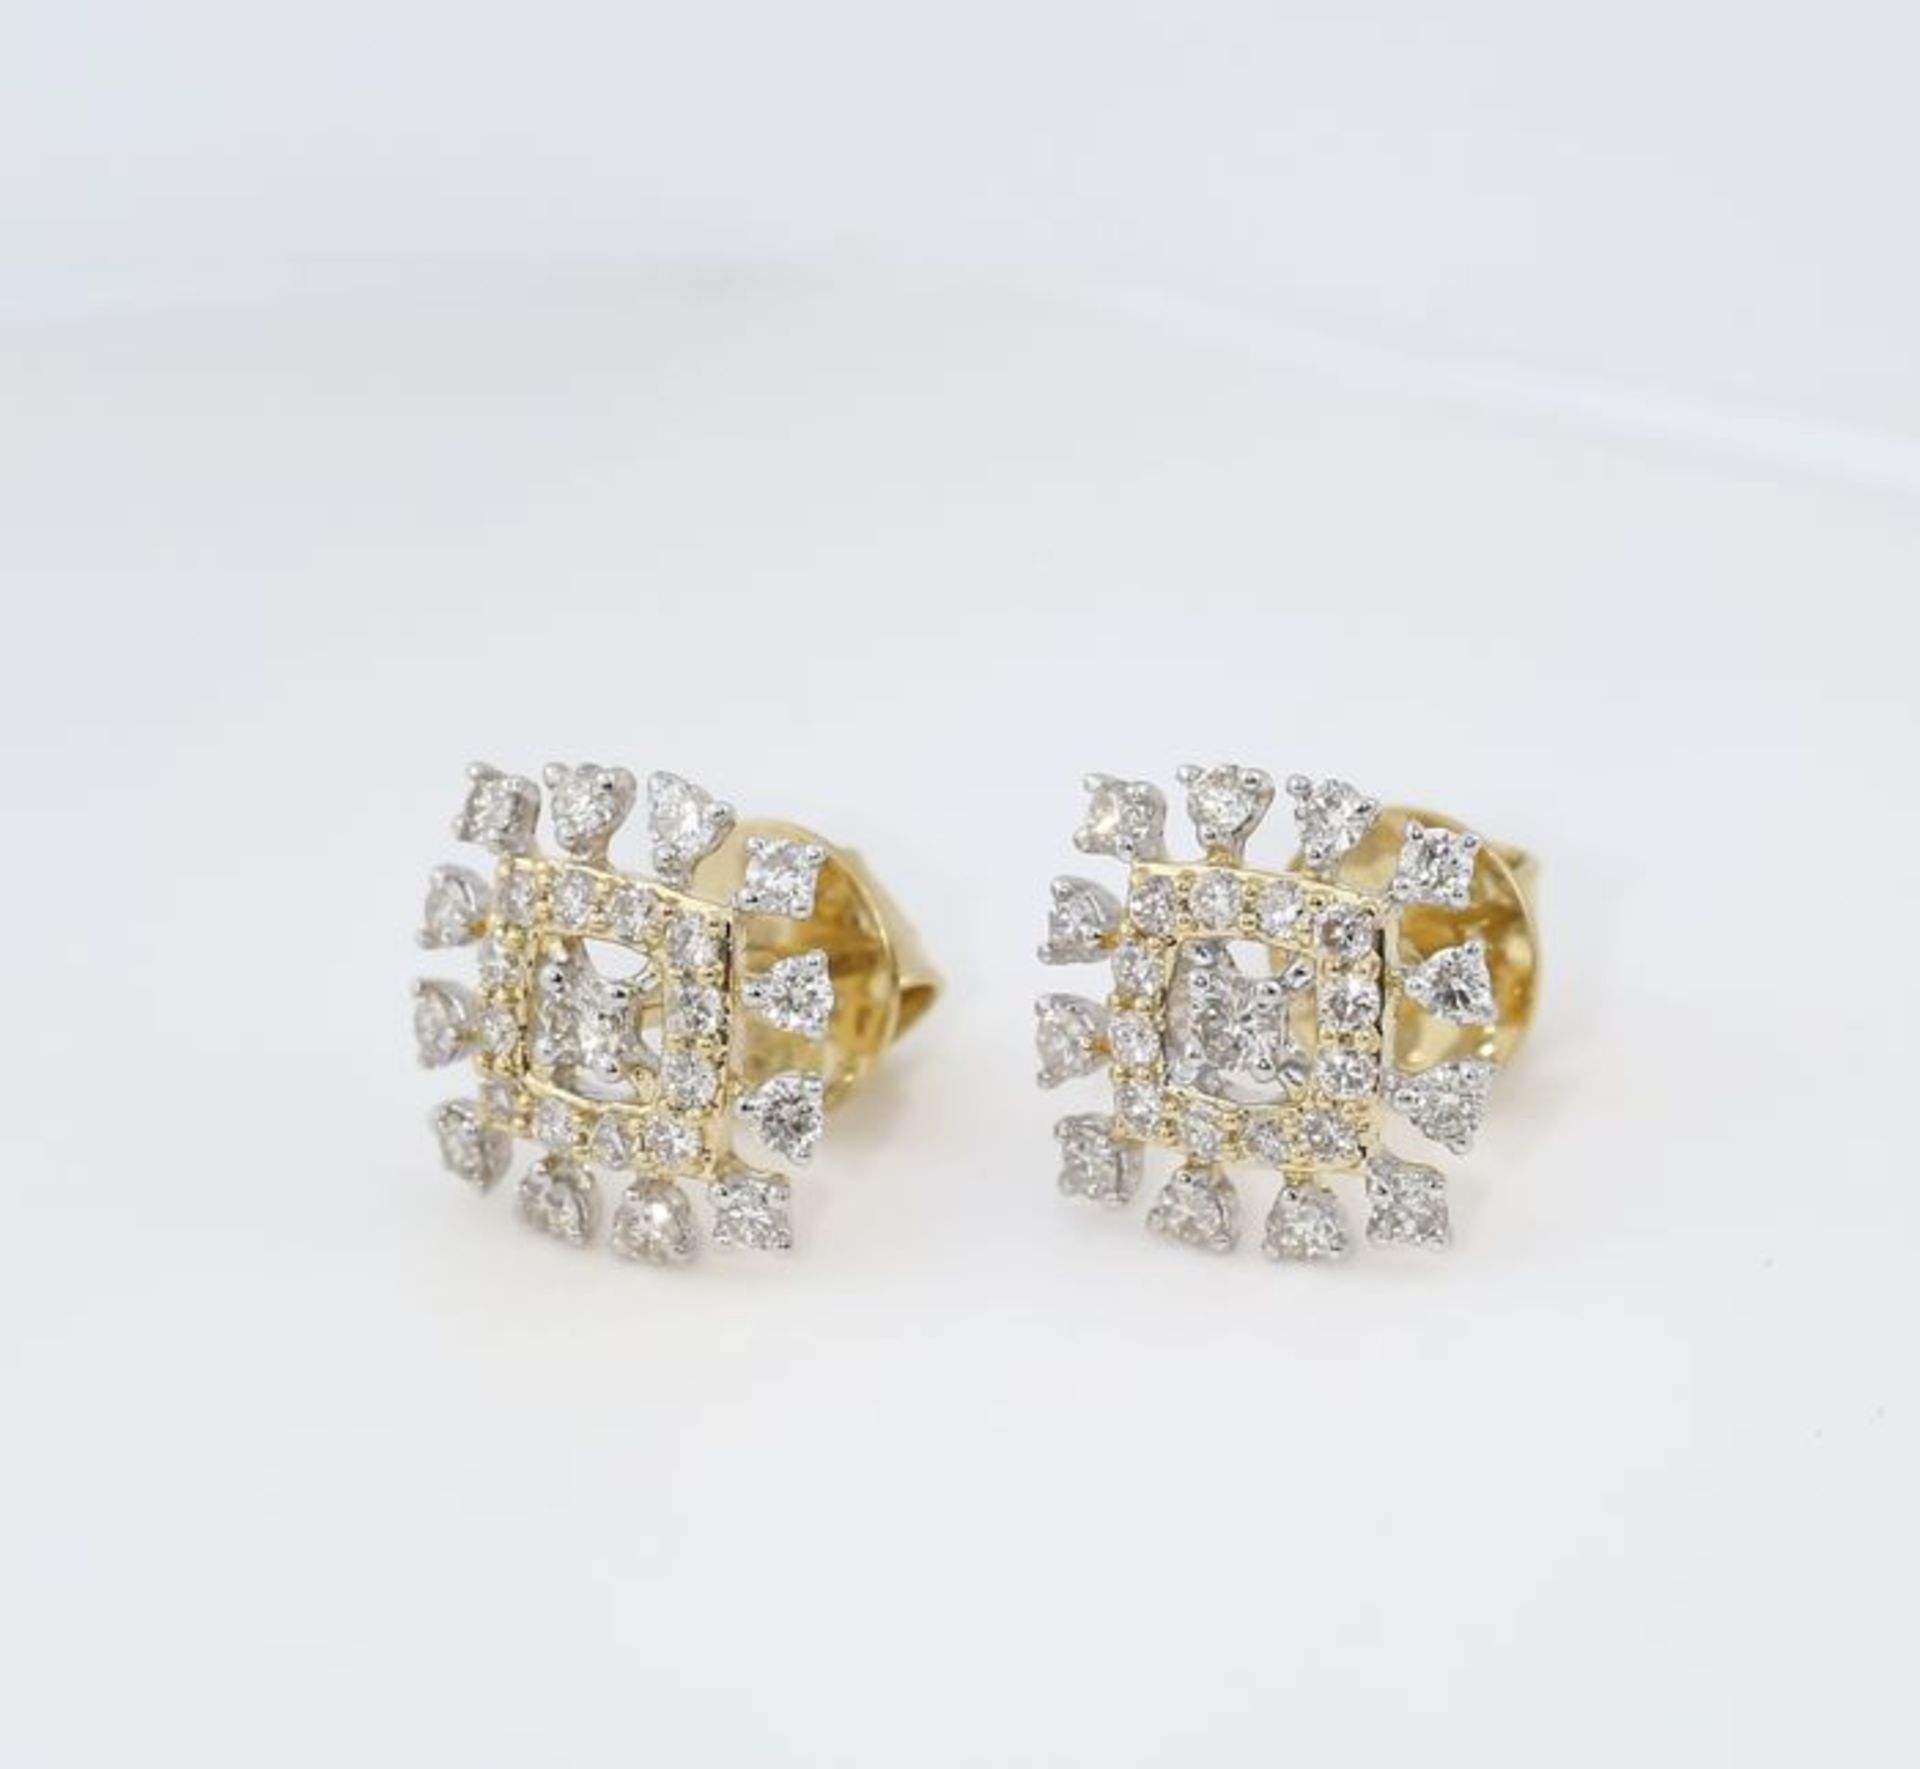 IGI Certified 18 K Yellow Gold Diamond Earrings - Image 5 of 7